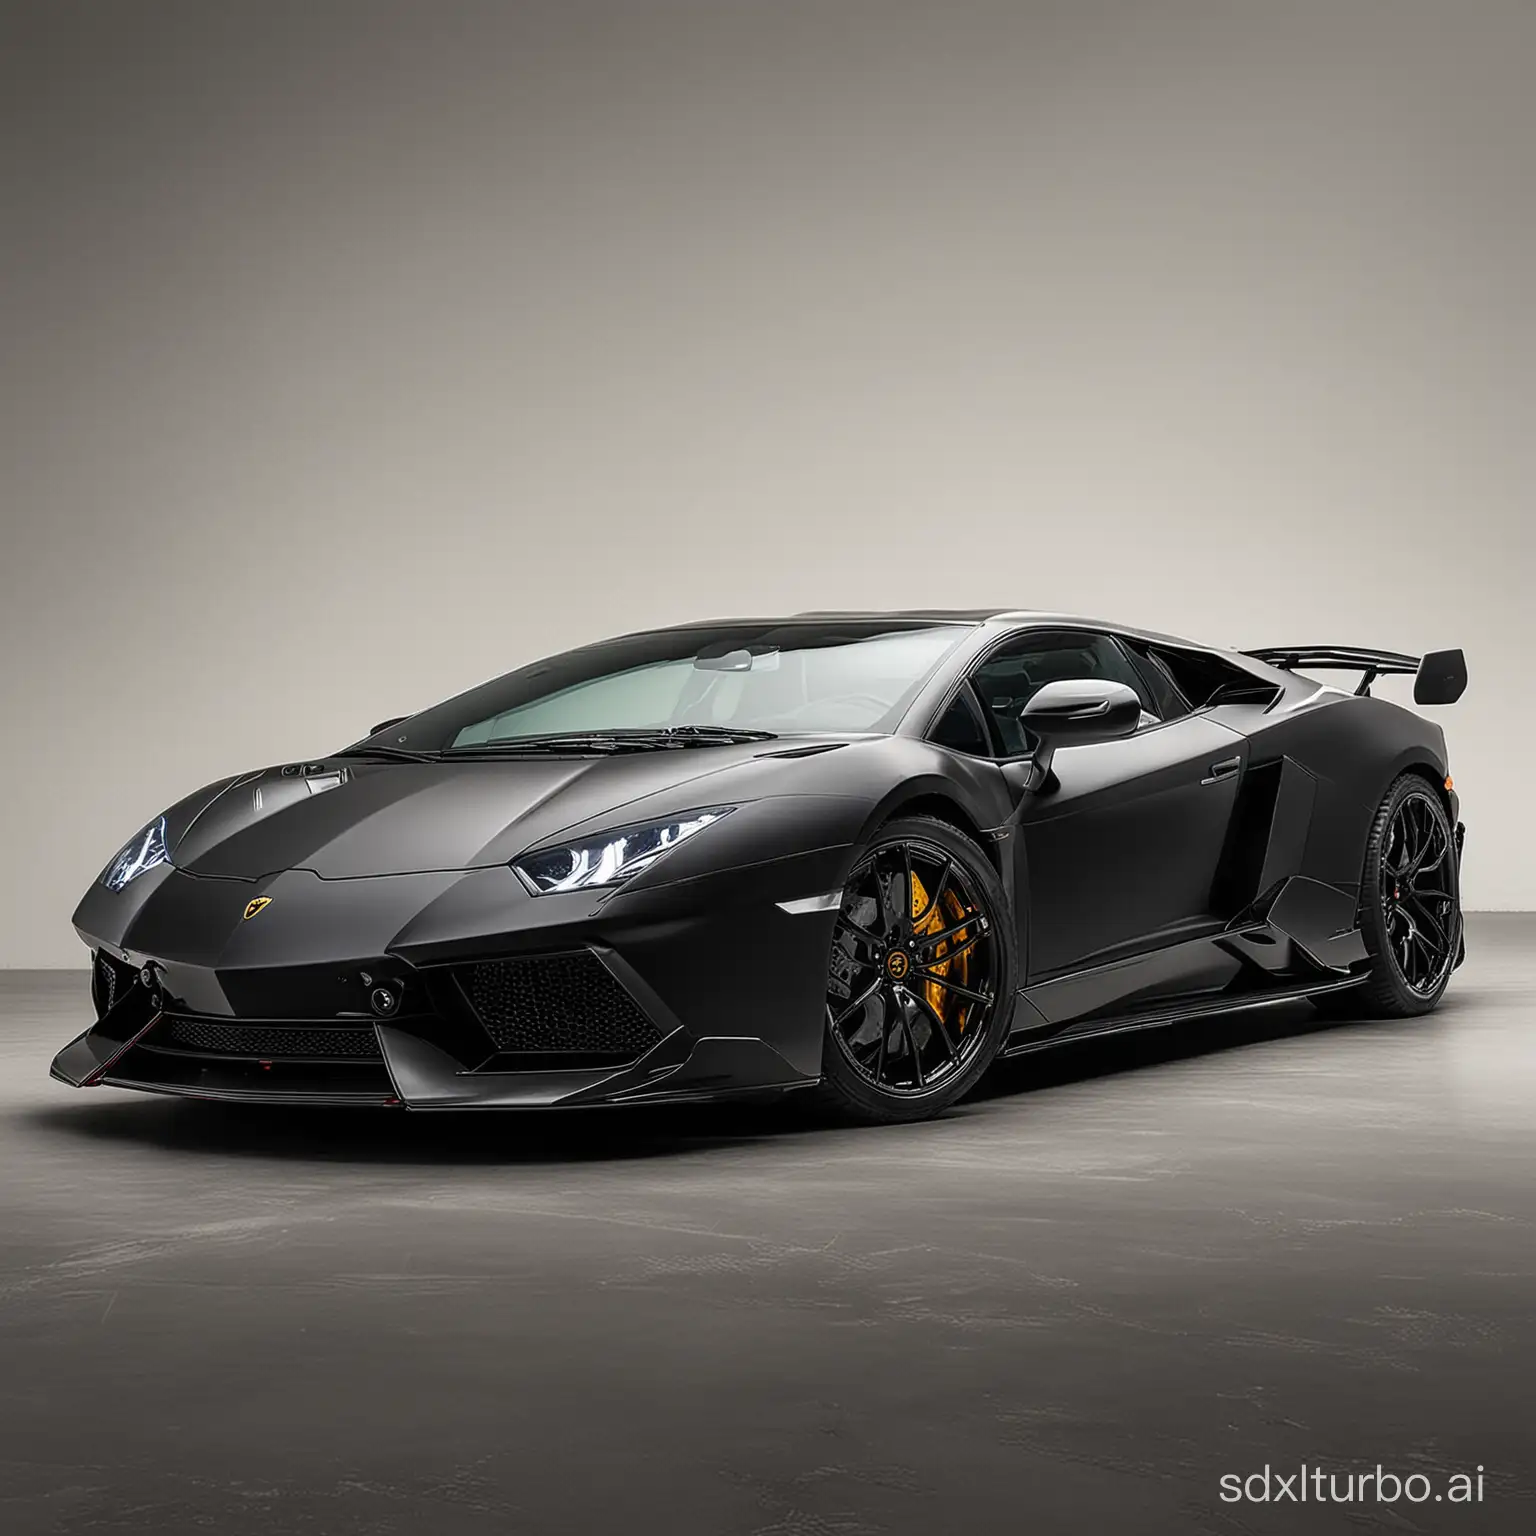 Luxury-Lamborghini-Sports-Car-Speeding-on-Desert-Highway